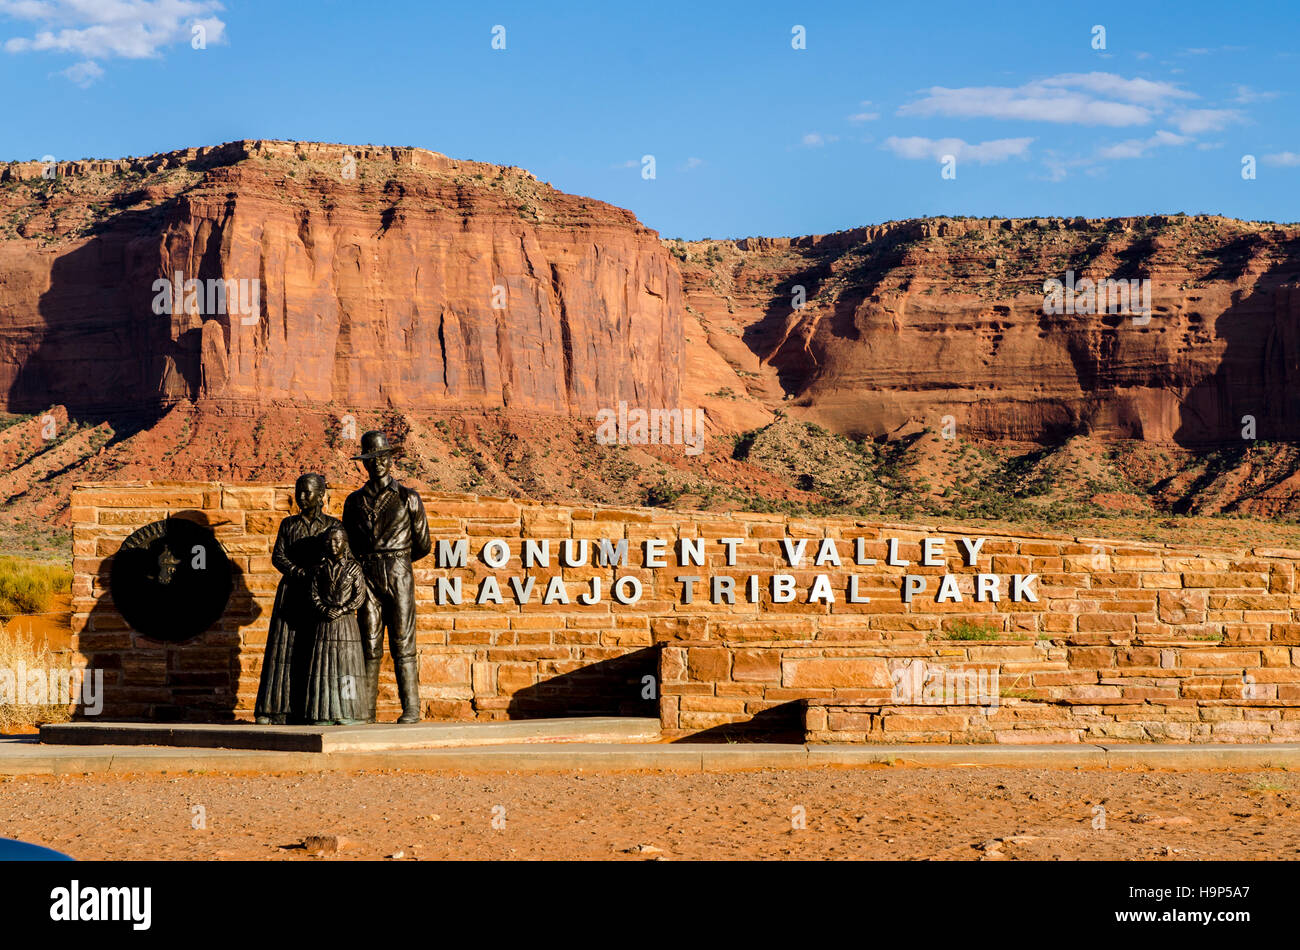 Monument Valley Navajo Tribal Park, Monument Valley, Utah, USA. Stock Photo